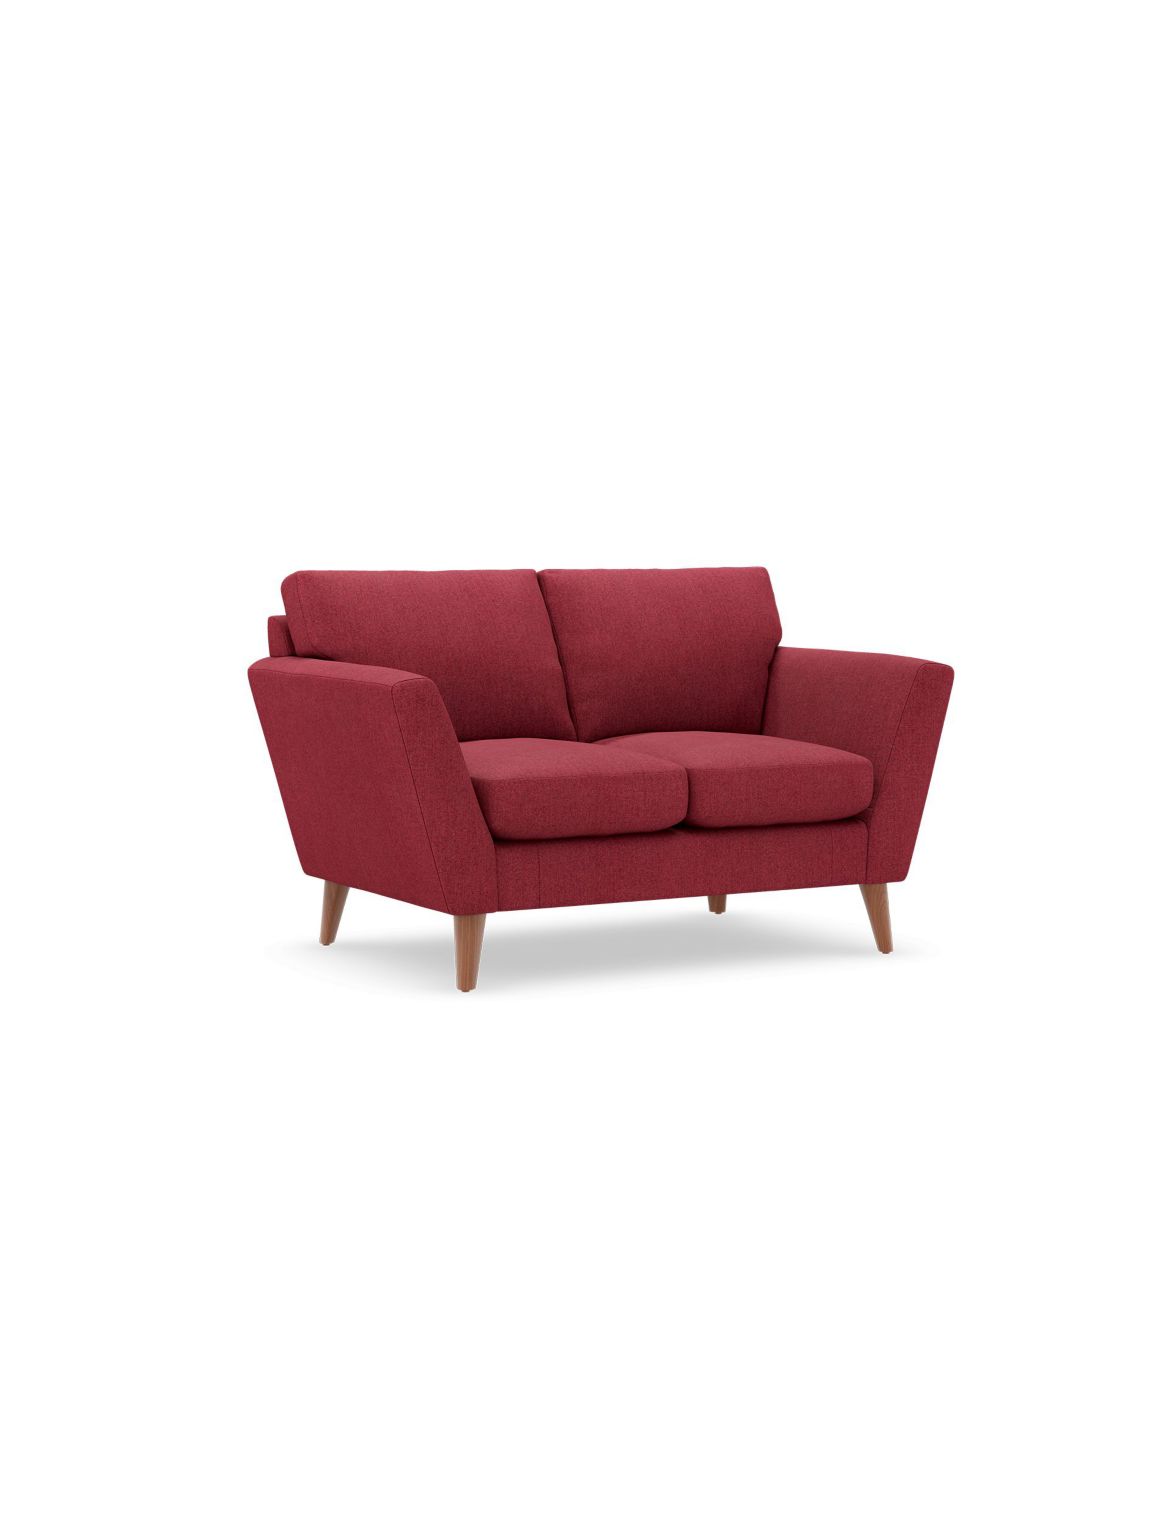 Foxbury Compact Sofa red